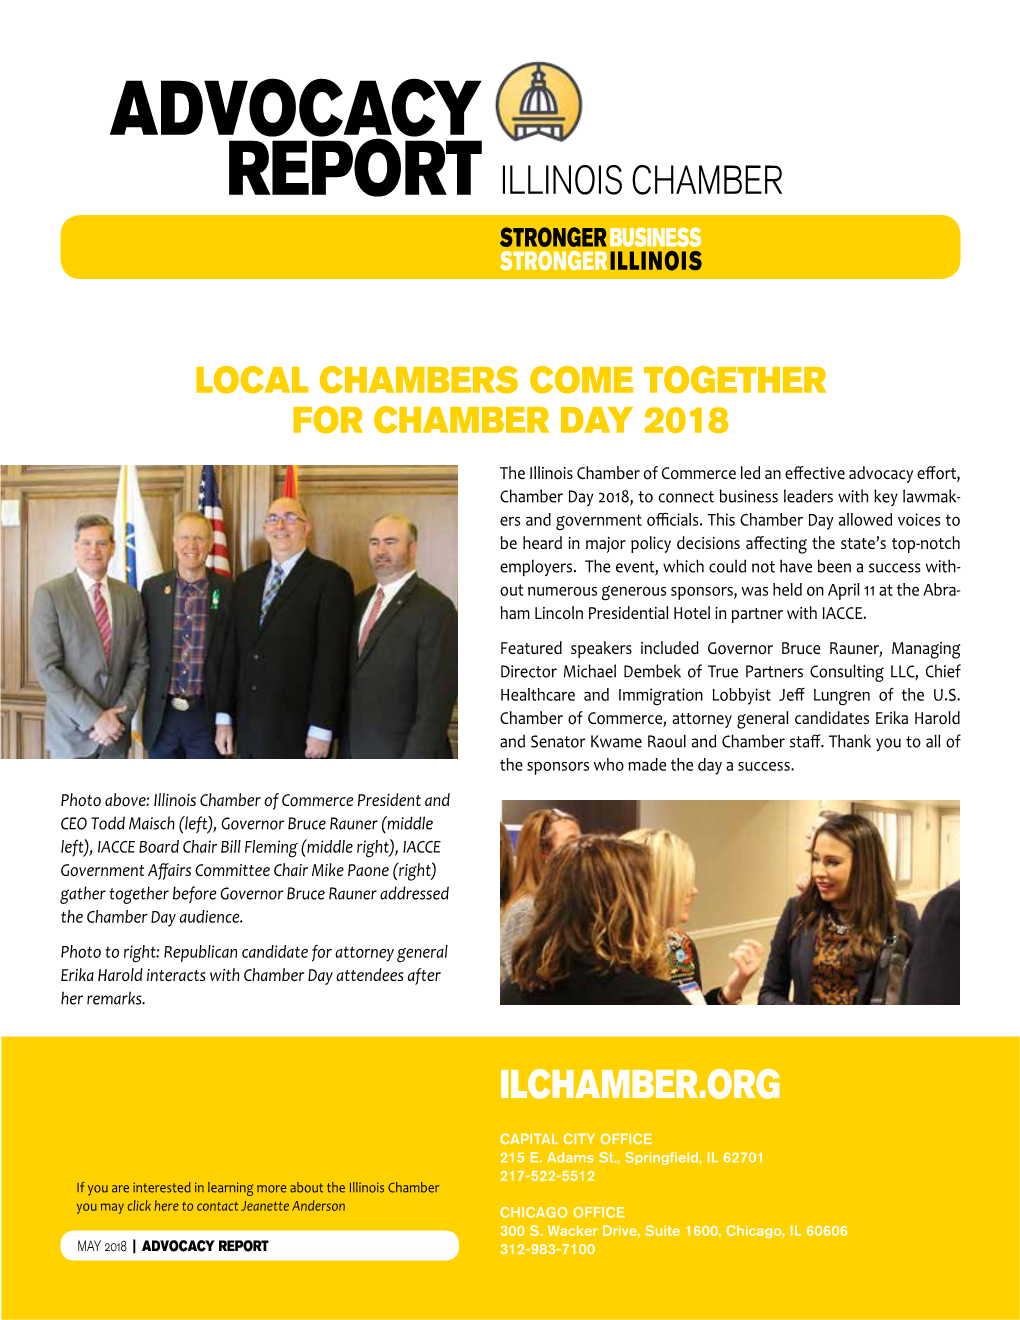 Advocacy Report Illinois Chamber